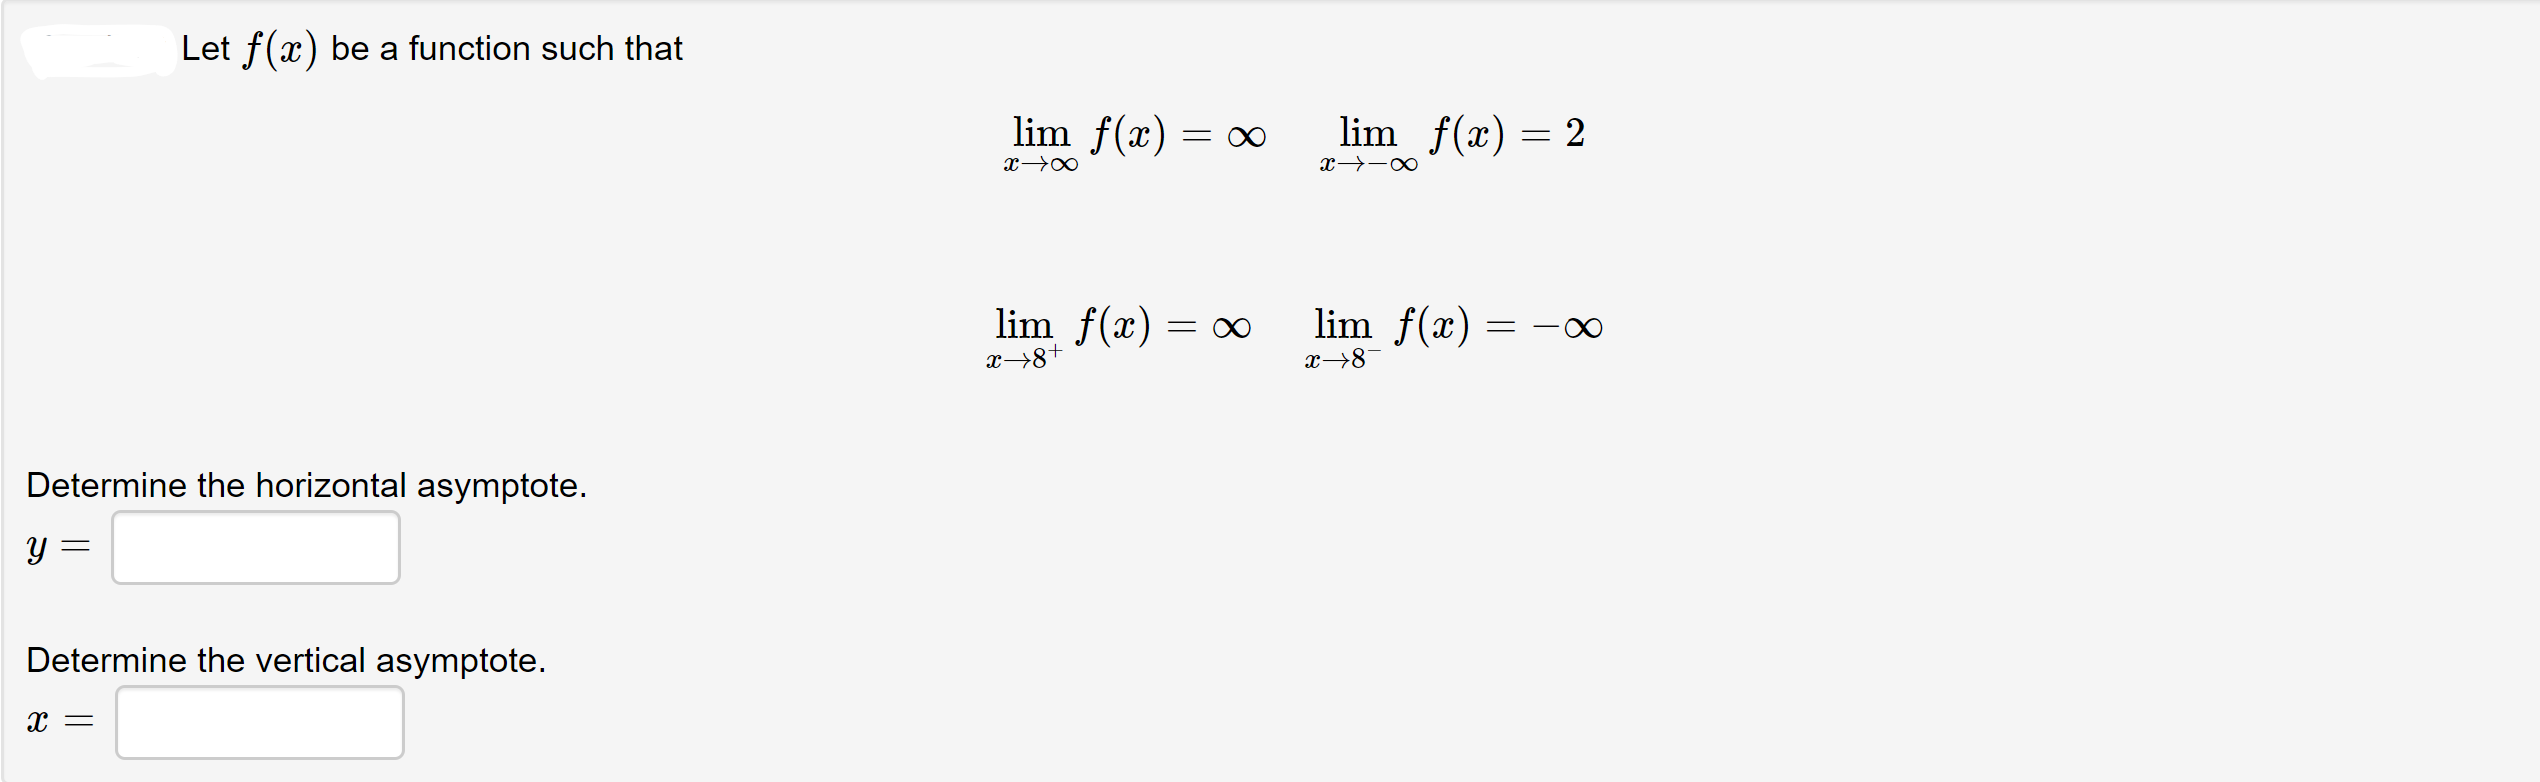 Let f(x) be a function such that
lim f(x)
lim f(x) = 2
= ∞
lim f(x) = o∞
lim f(x)
x→8+
x→8¬
Determine the horizontal asymptote.
Determine the vertical asymptote.
